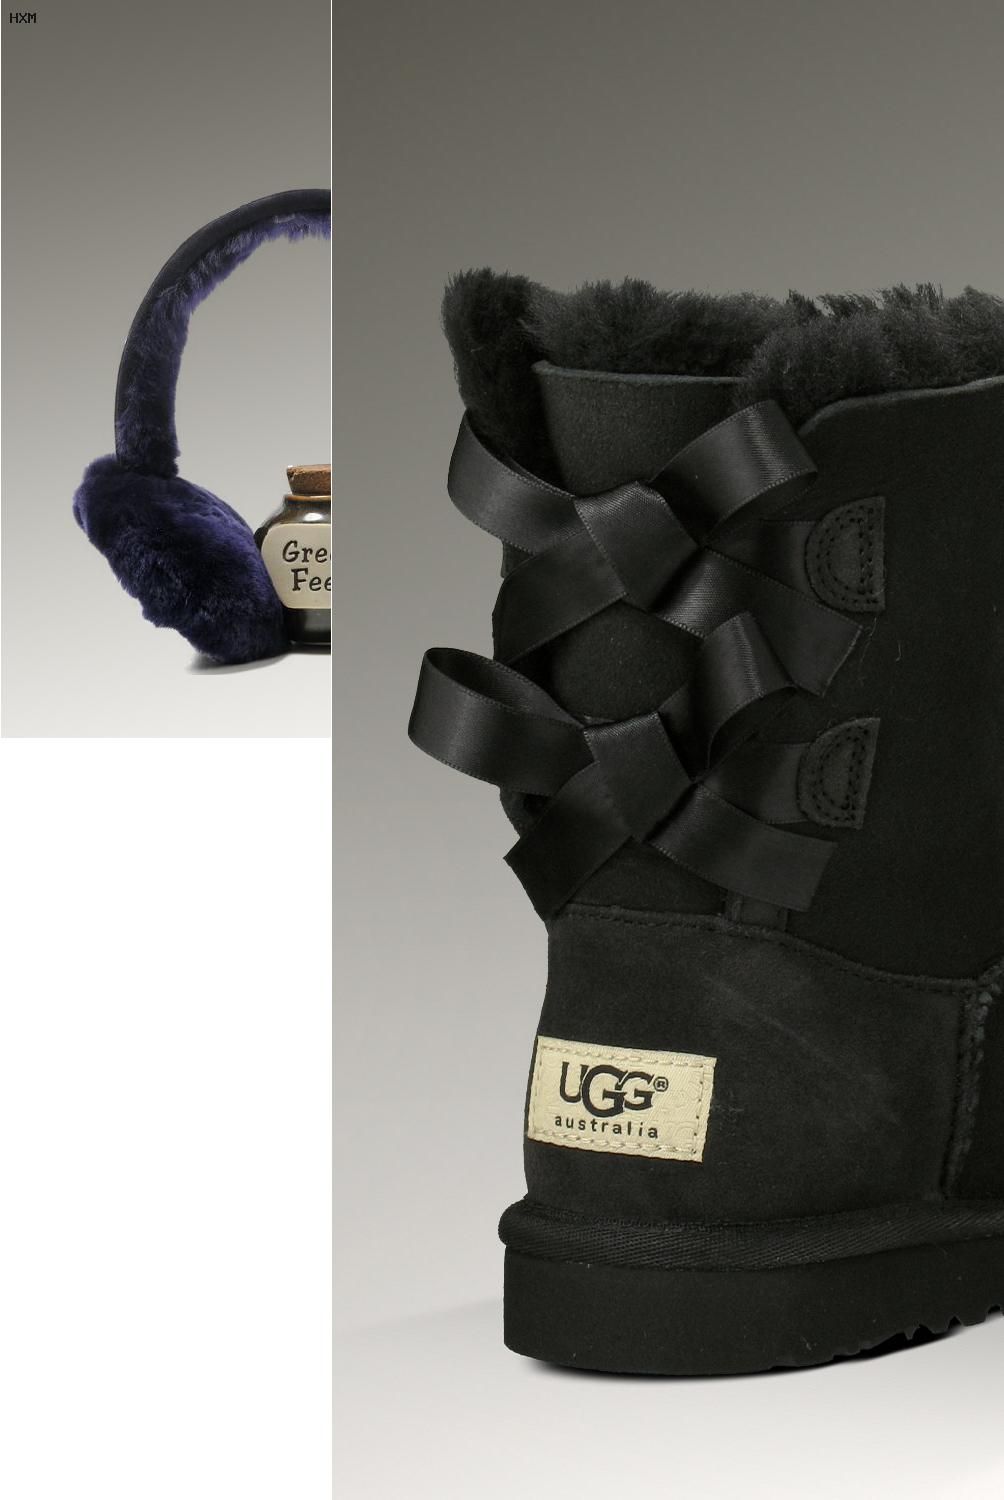 black friday deals 2018 ugg boots